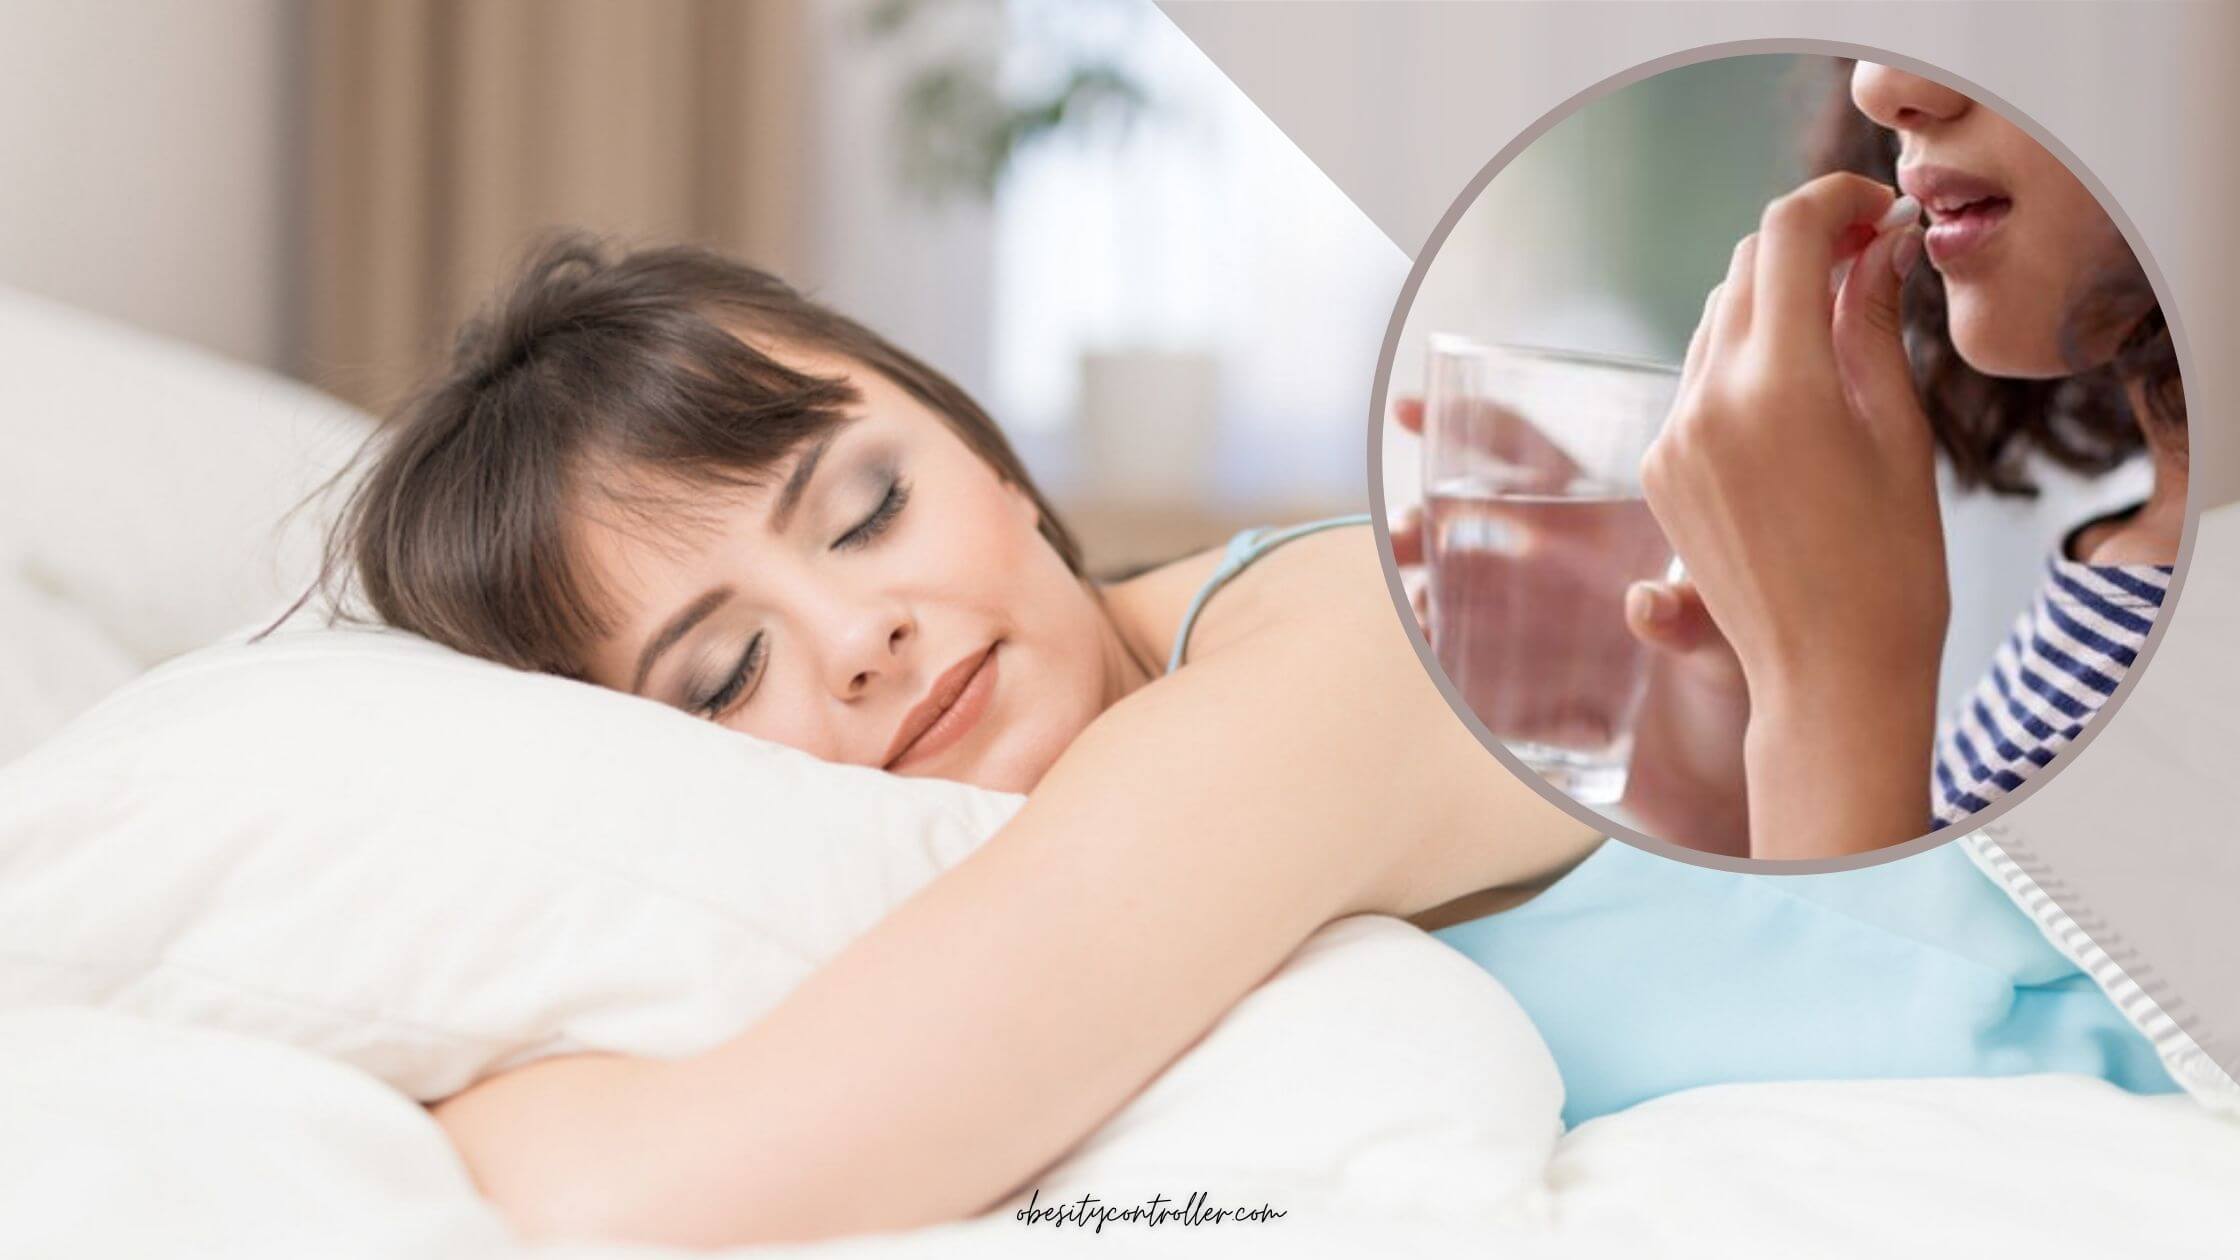 The Use Of Melatonin For Sleep A Potential Health Harm